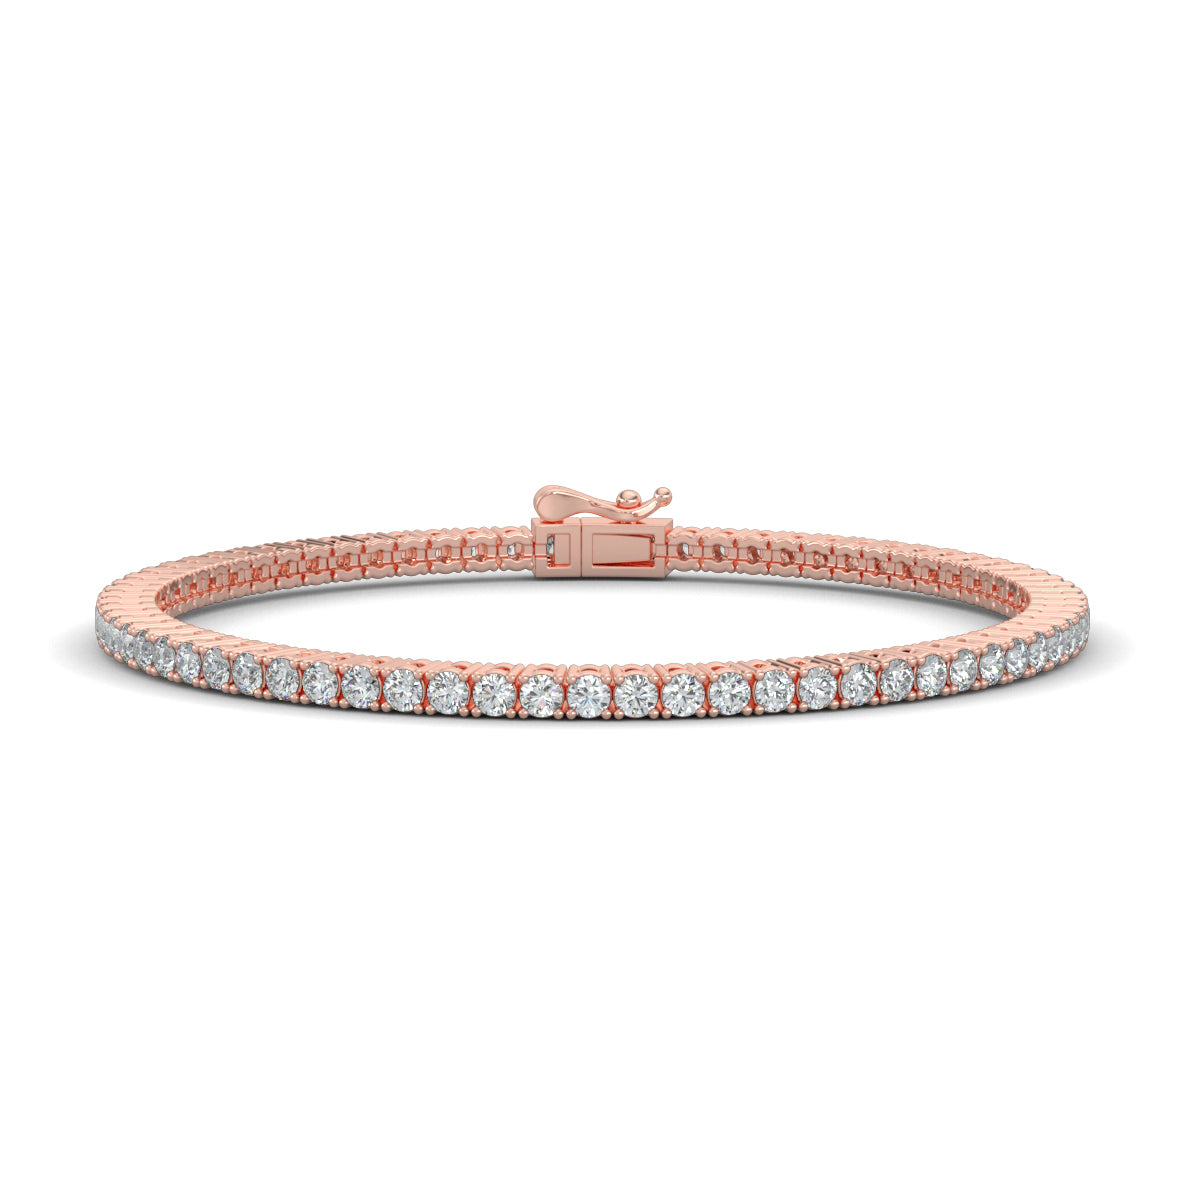 Rose Gold, Diamond Bracelet, Natural diamond bracelet, Lab-grown diamond bracelet, 3-Pointer Tennis Bracelet, tennis bracelet, prong setting, jewelry